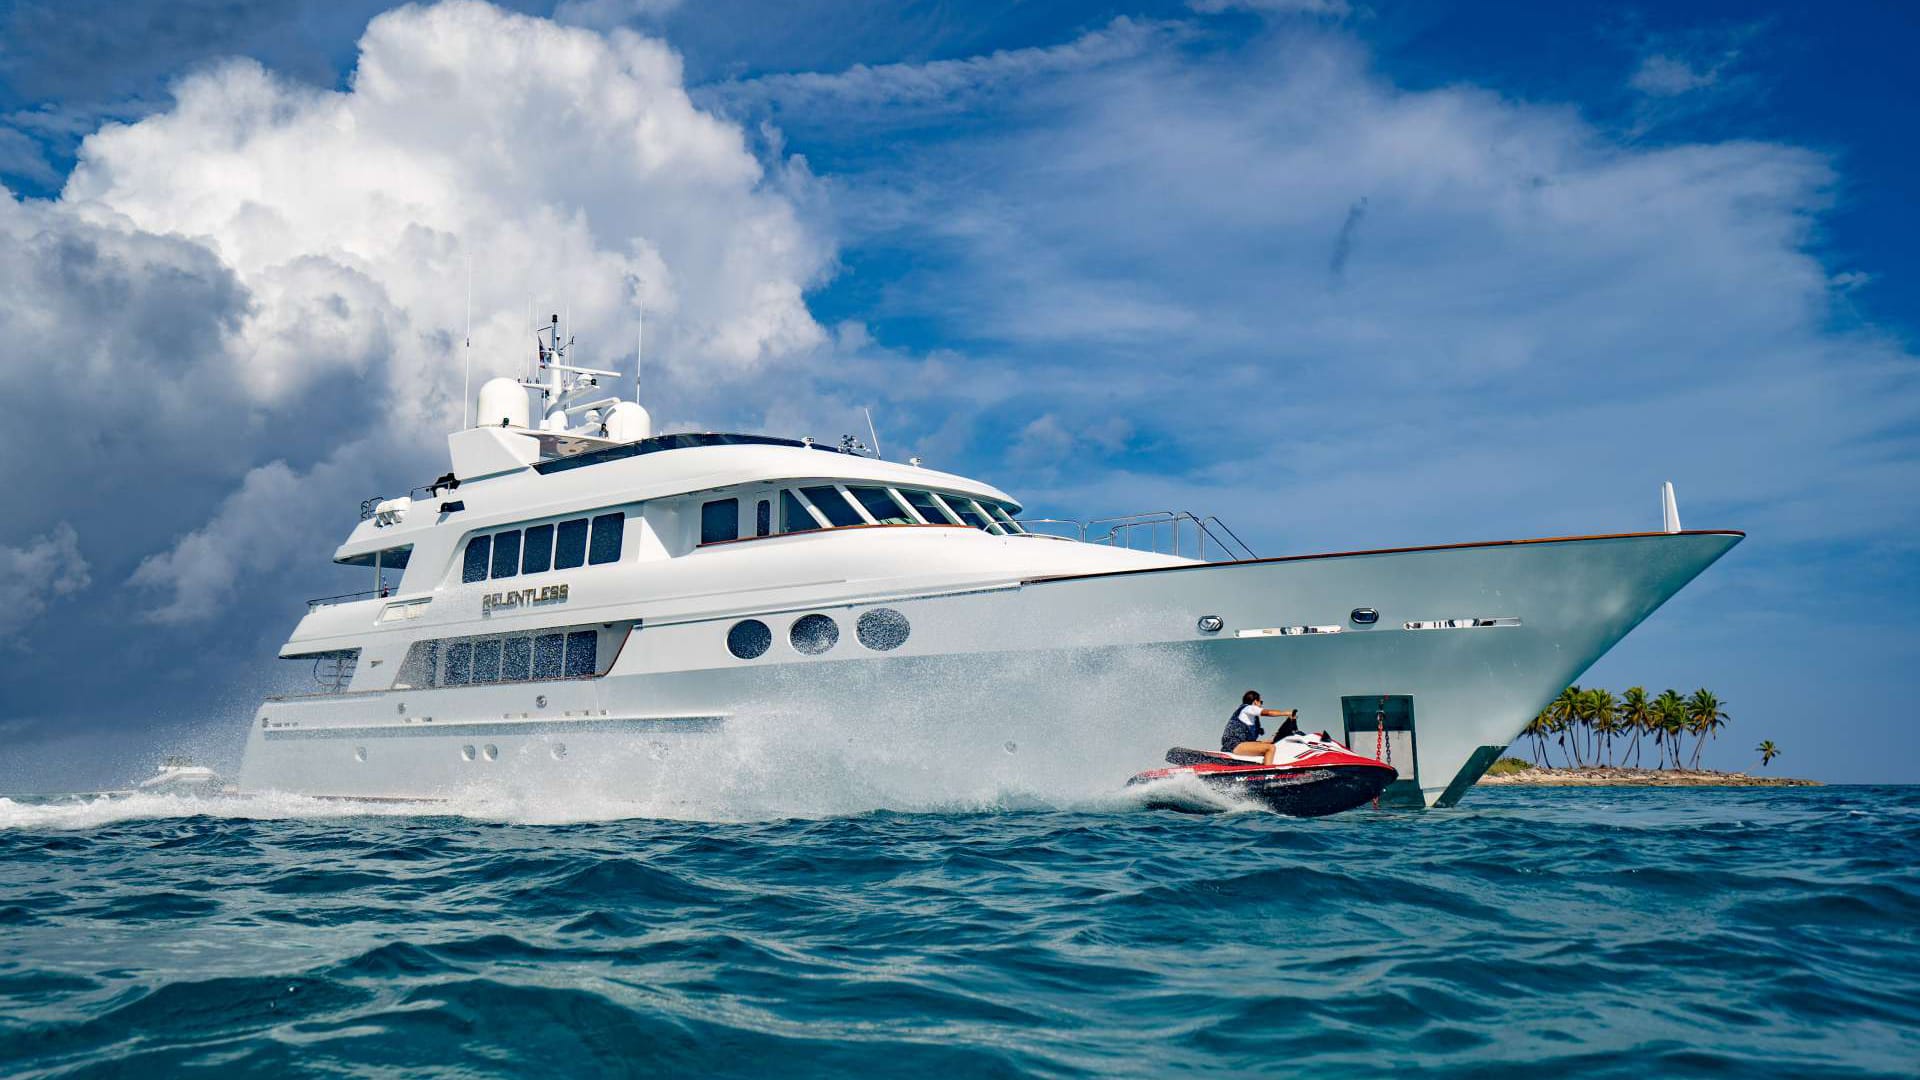 Relentless Yacht Sold